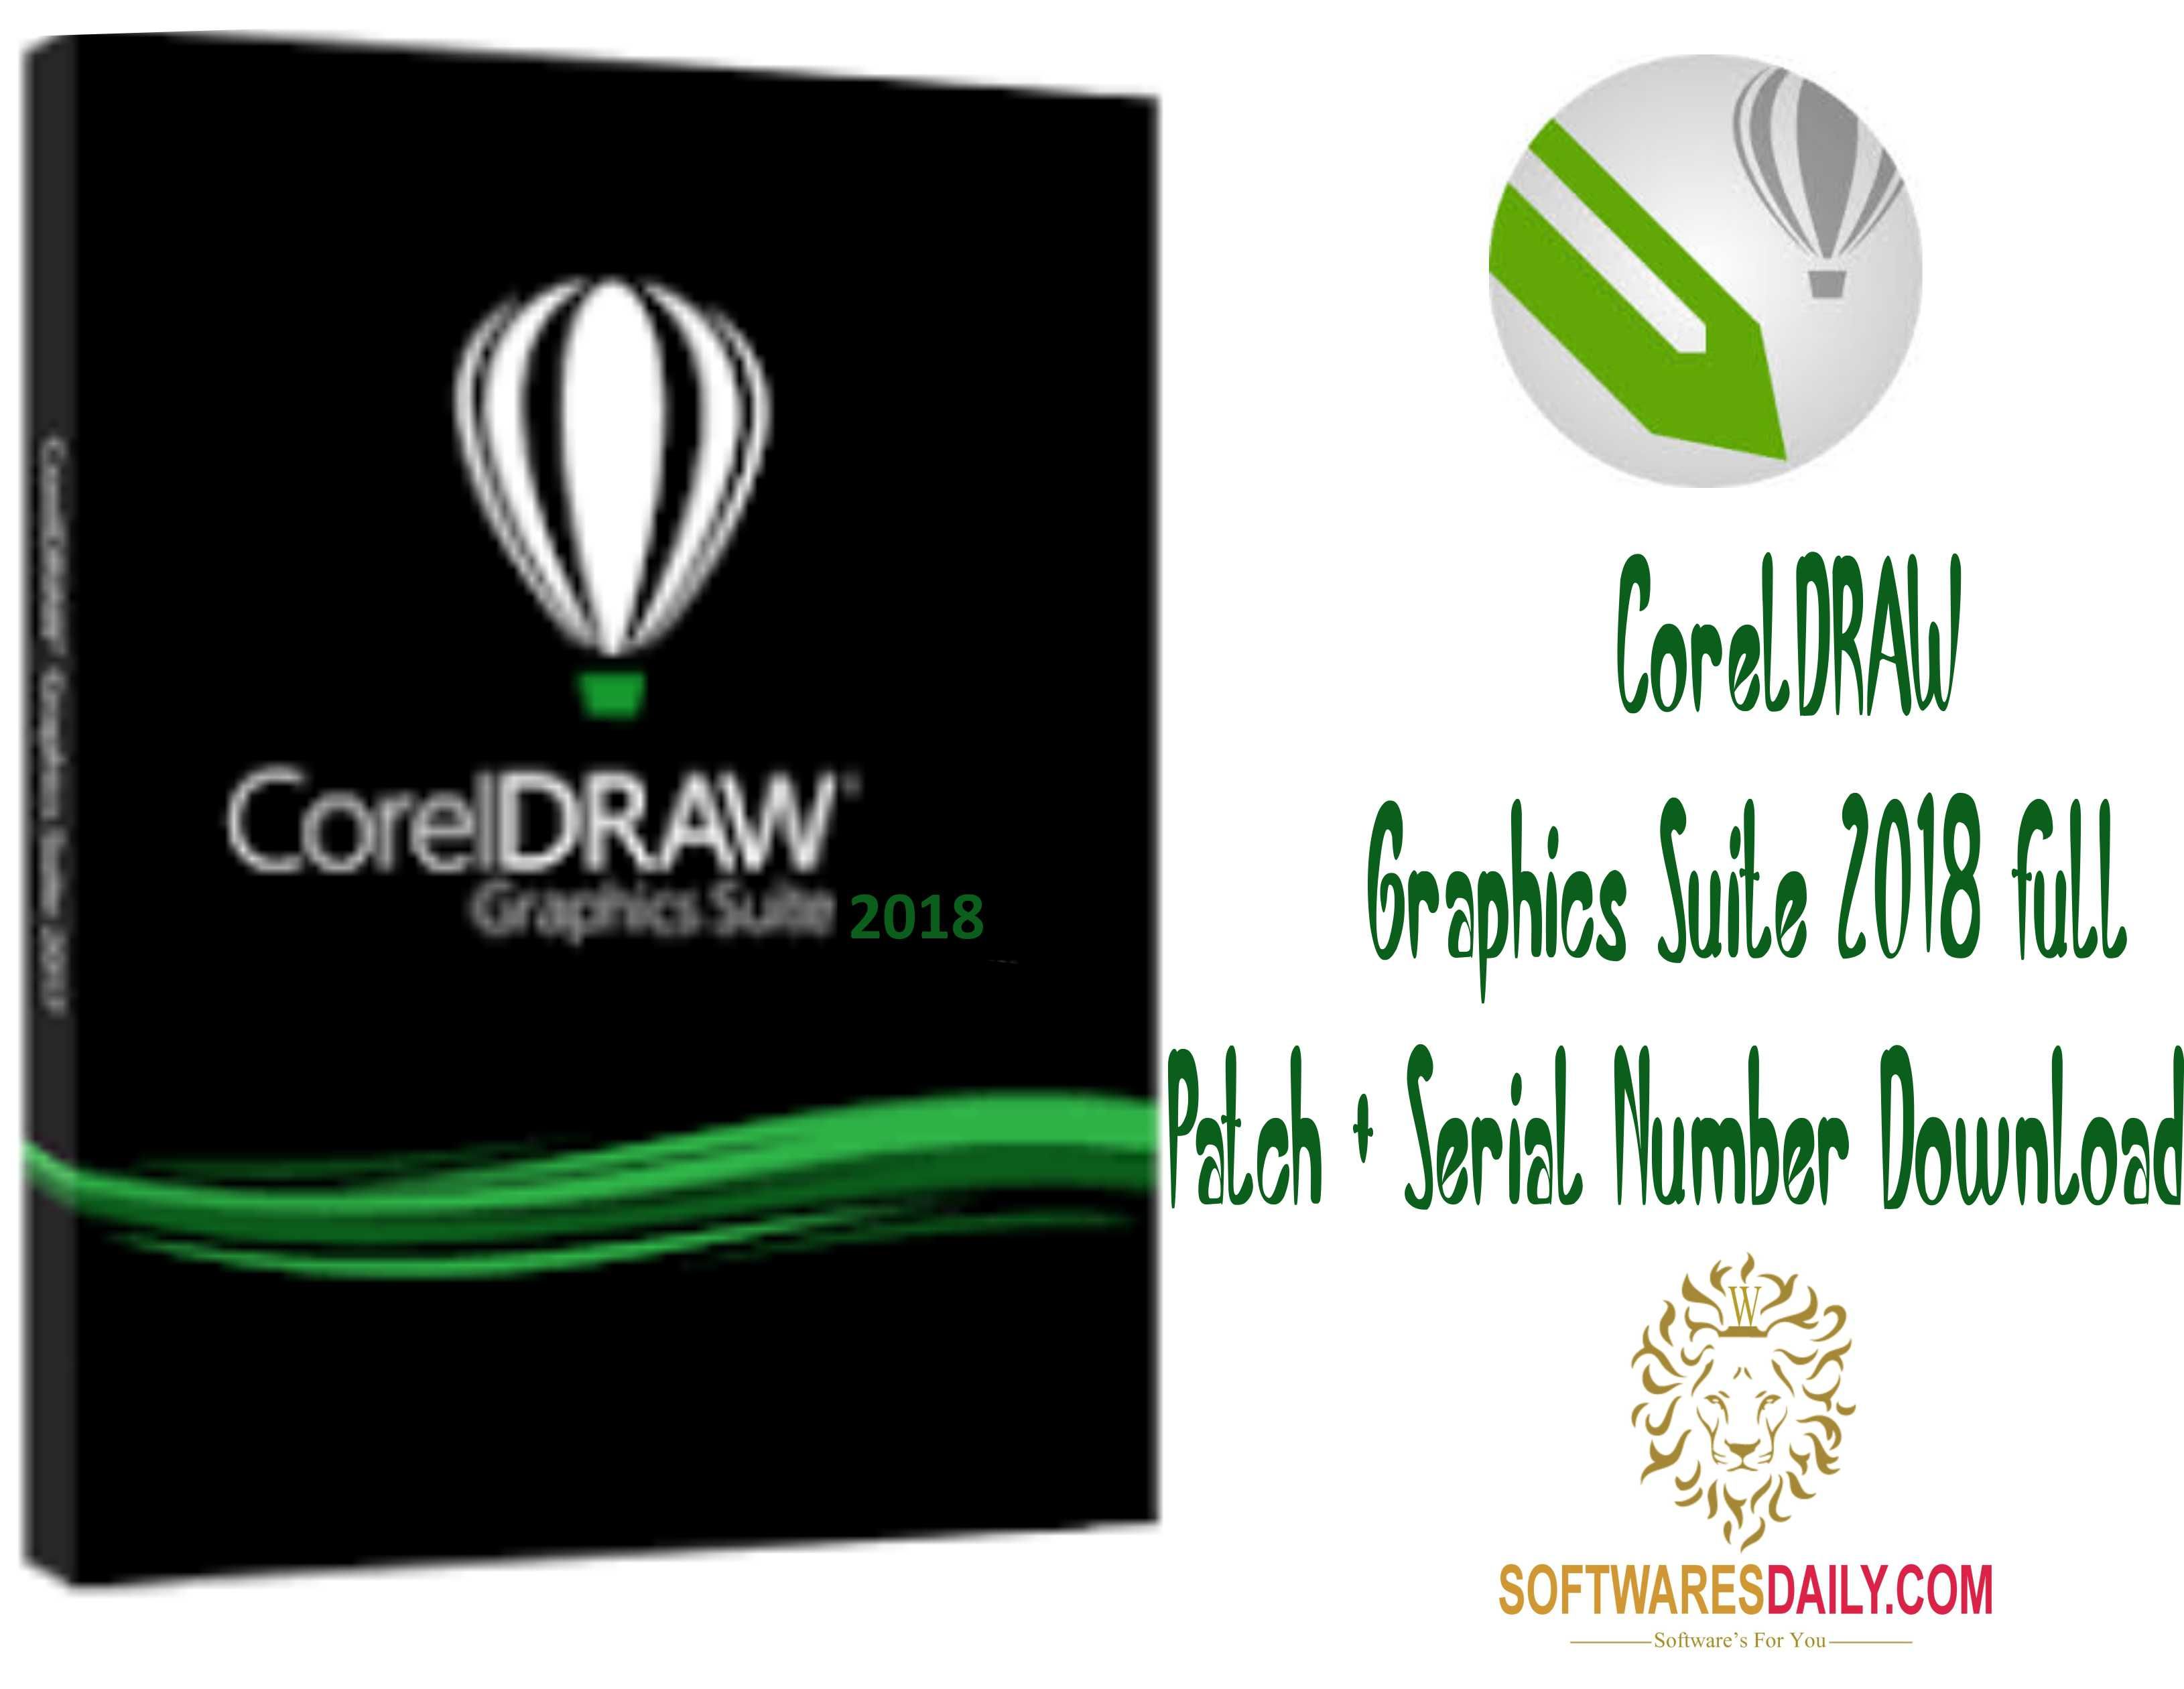 Coreldraw 2018 crack download free